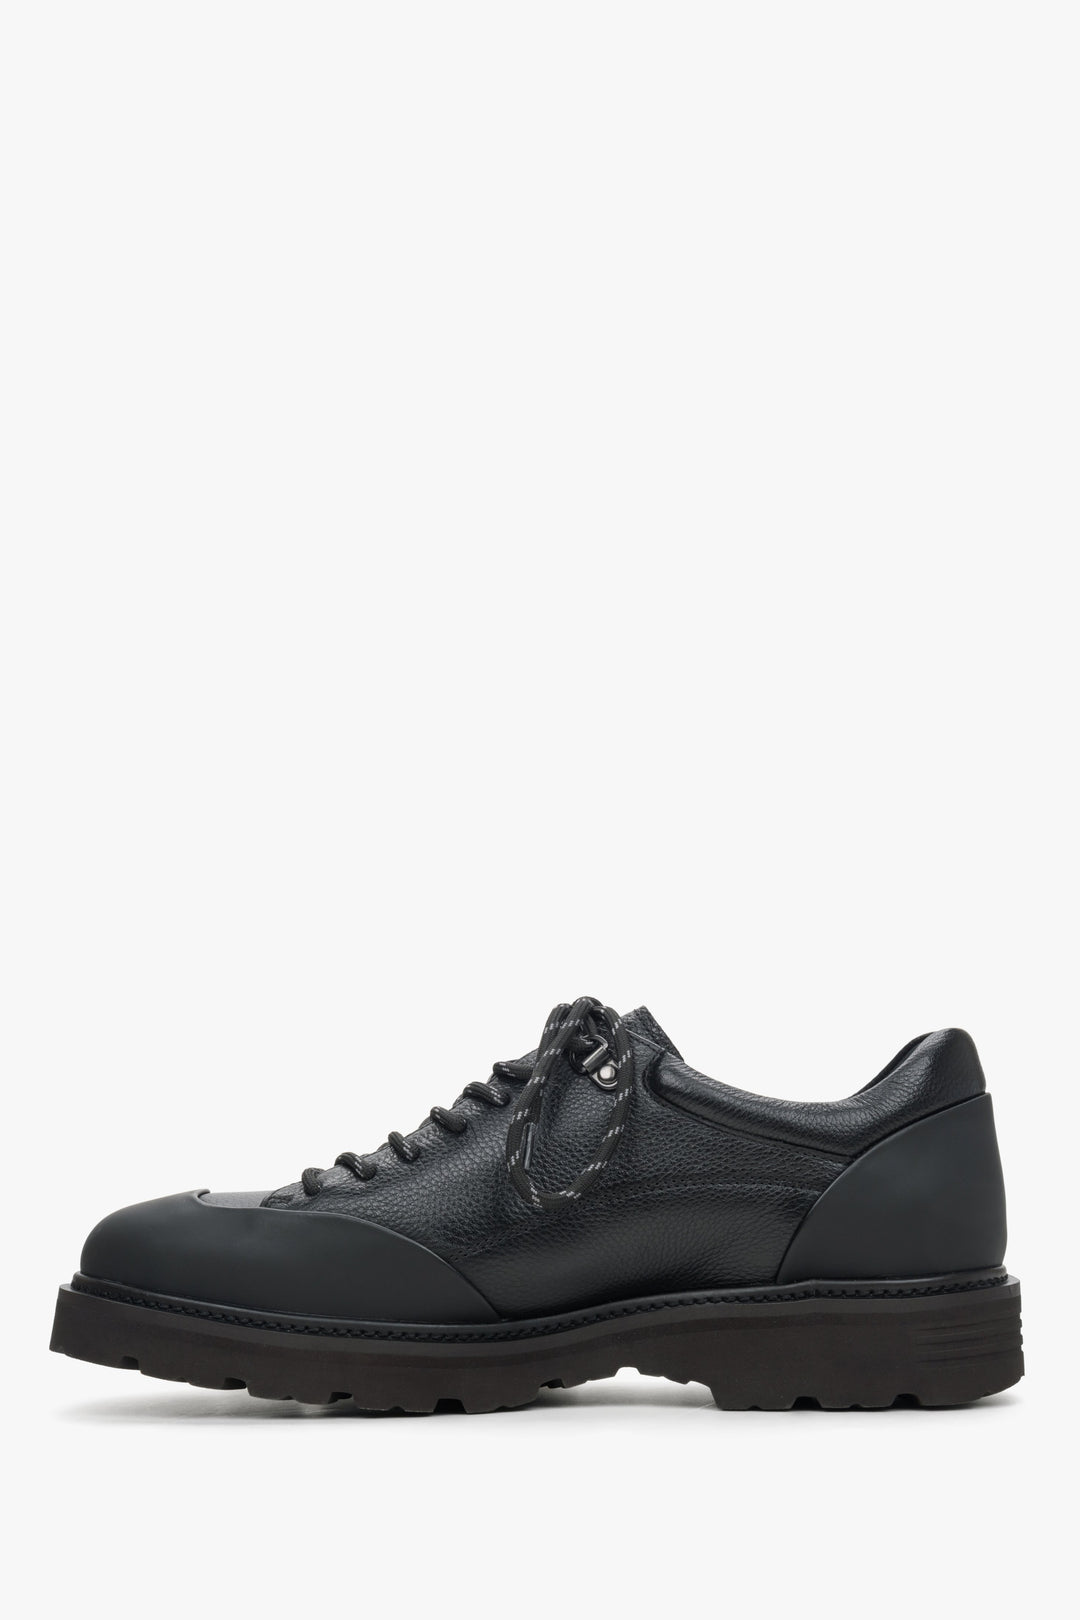 Black comfortable leather men's loafers by Estro - shoe profile.